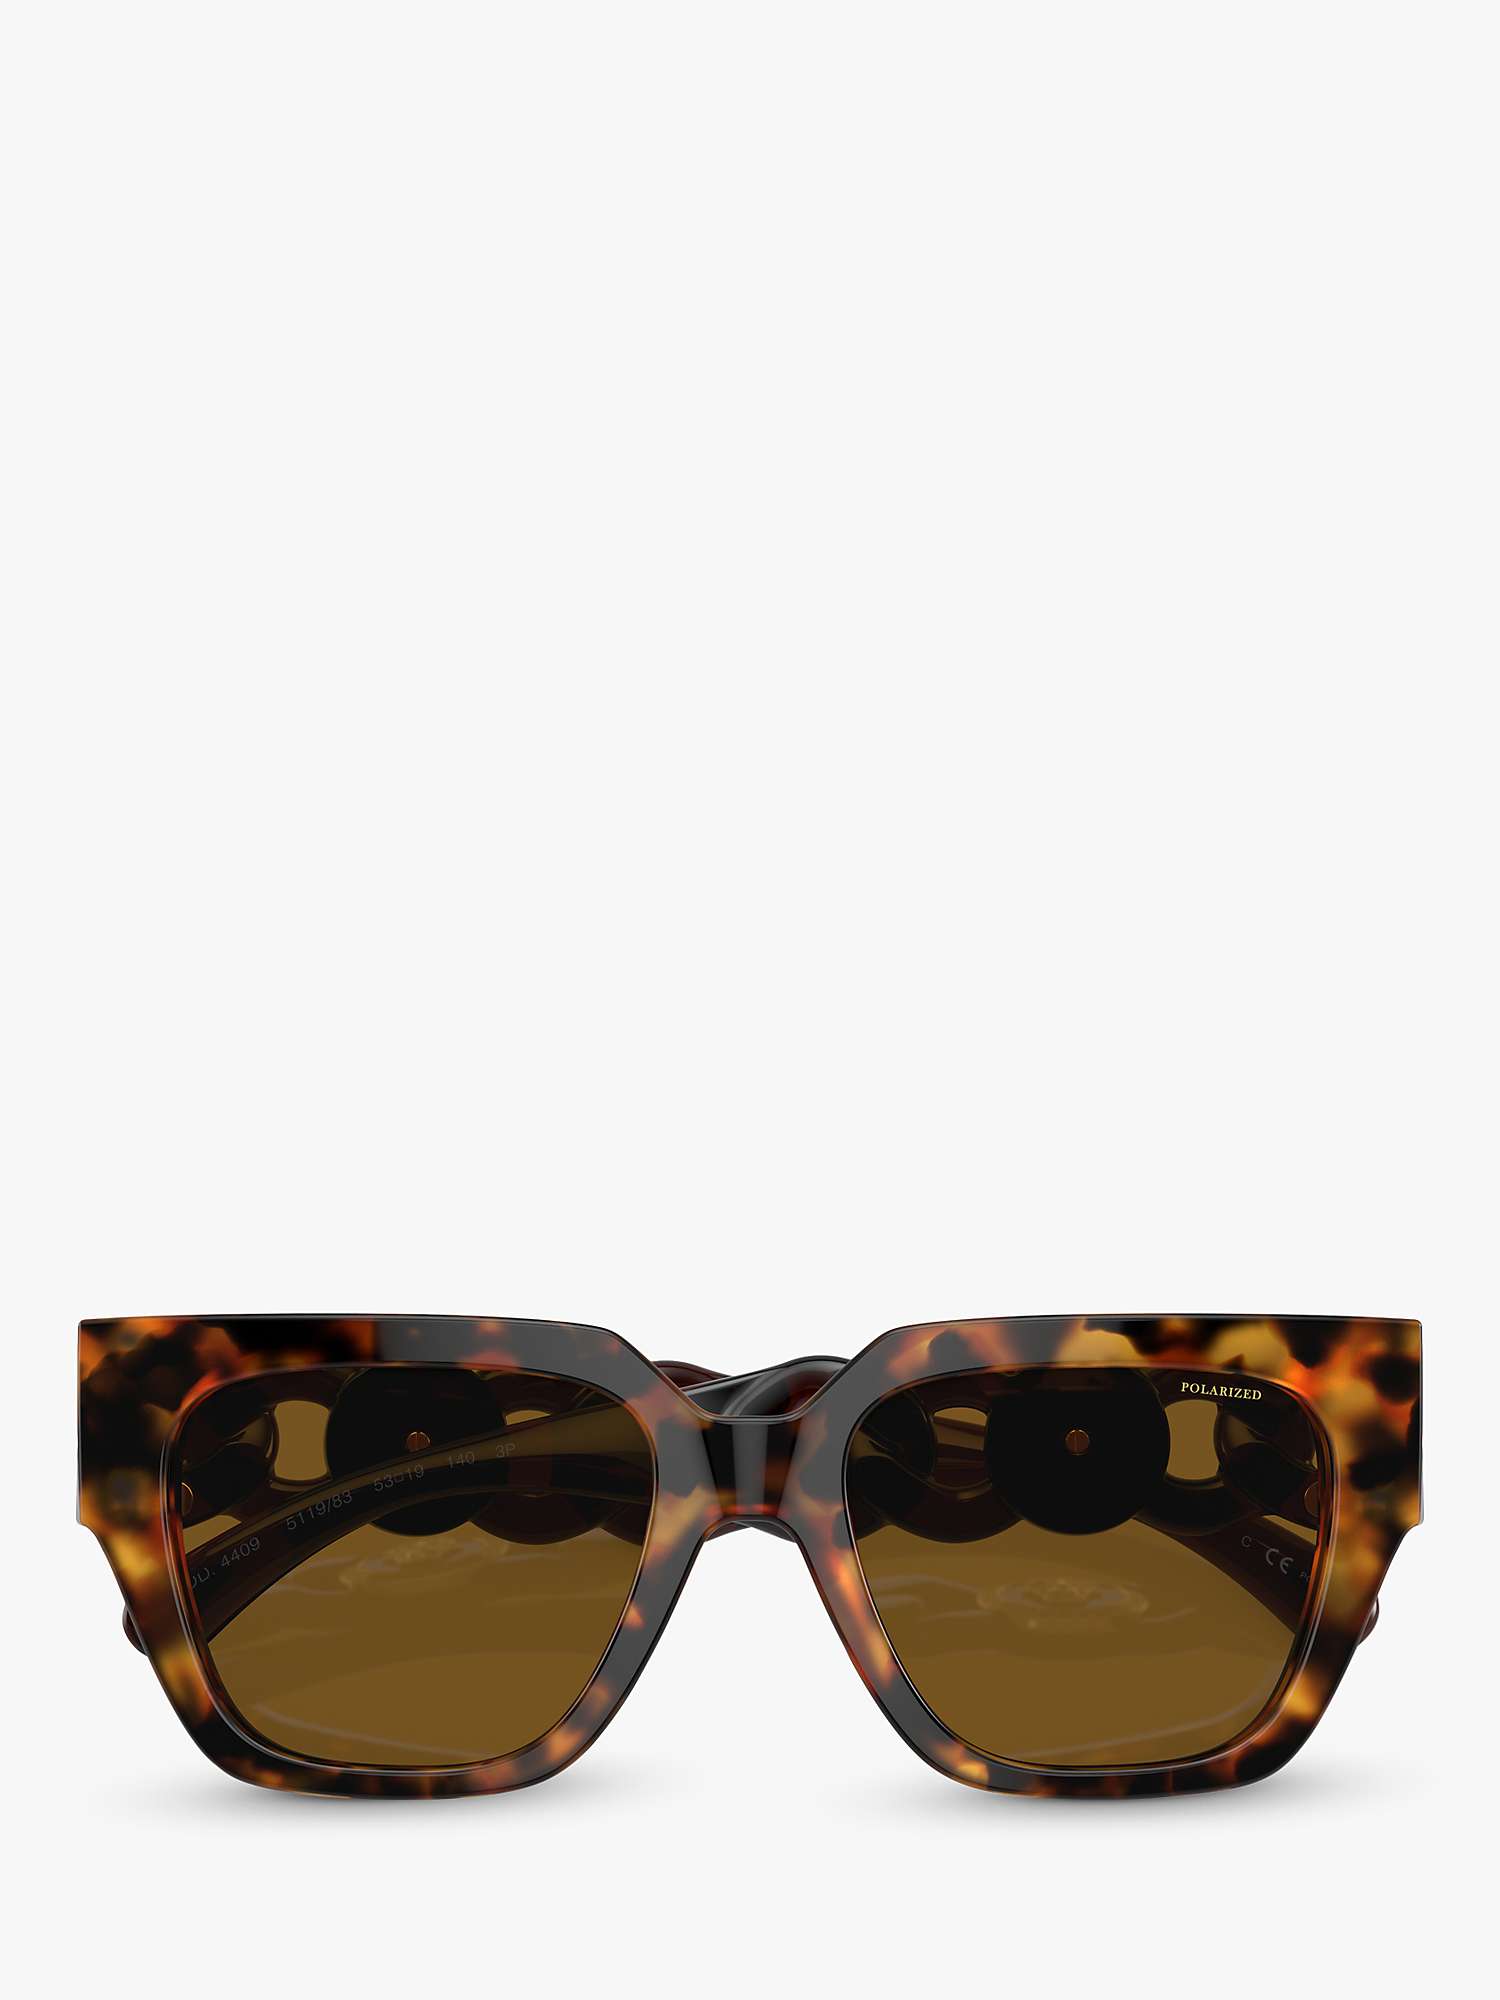 Buy Versace VE4409 Women's Polarised Square Sunglasses, Tortoiseshell/Havana Online at johnlewis.com